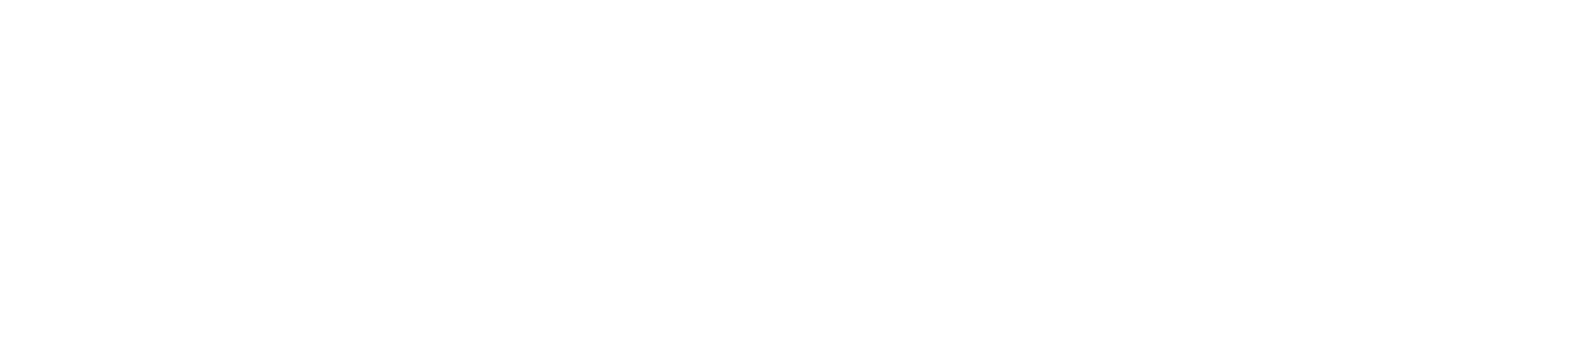 easyJet Logo groß für dunkle Hintergründe (transparentes PNG)